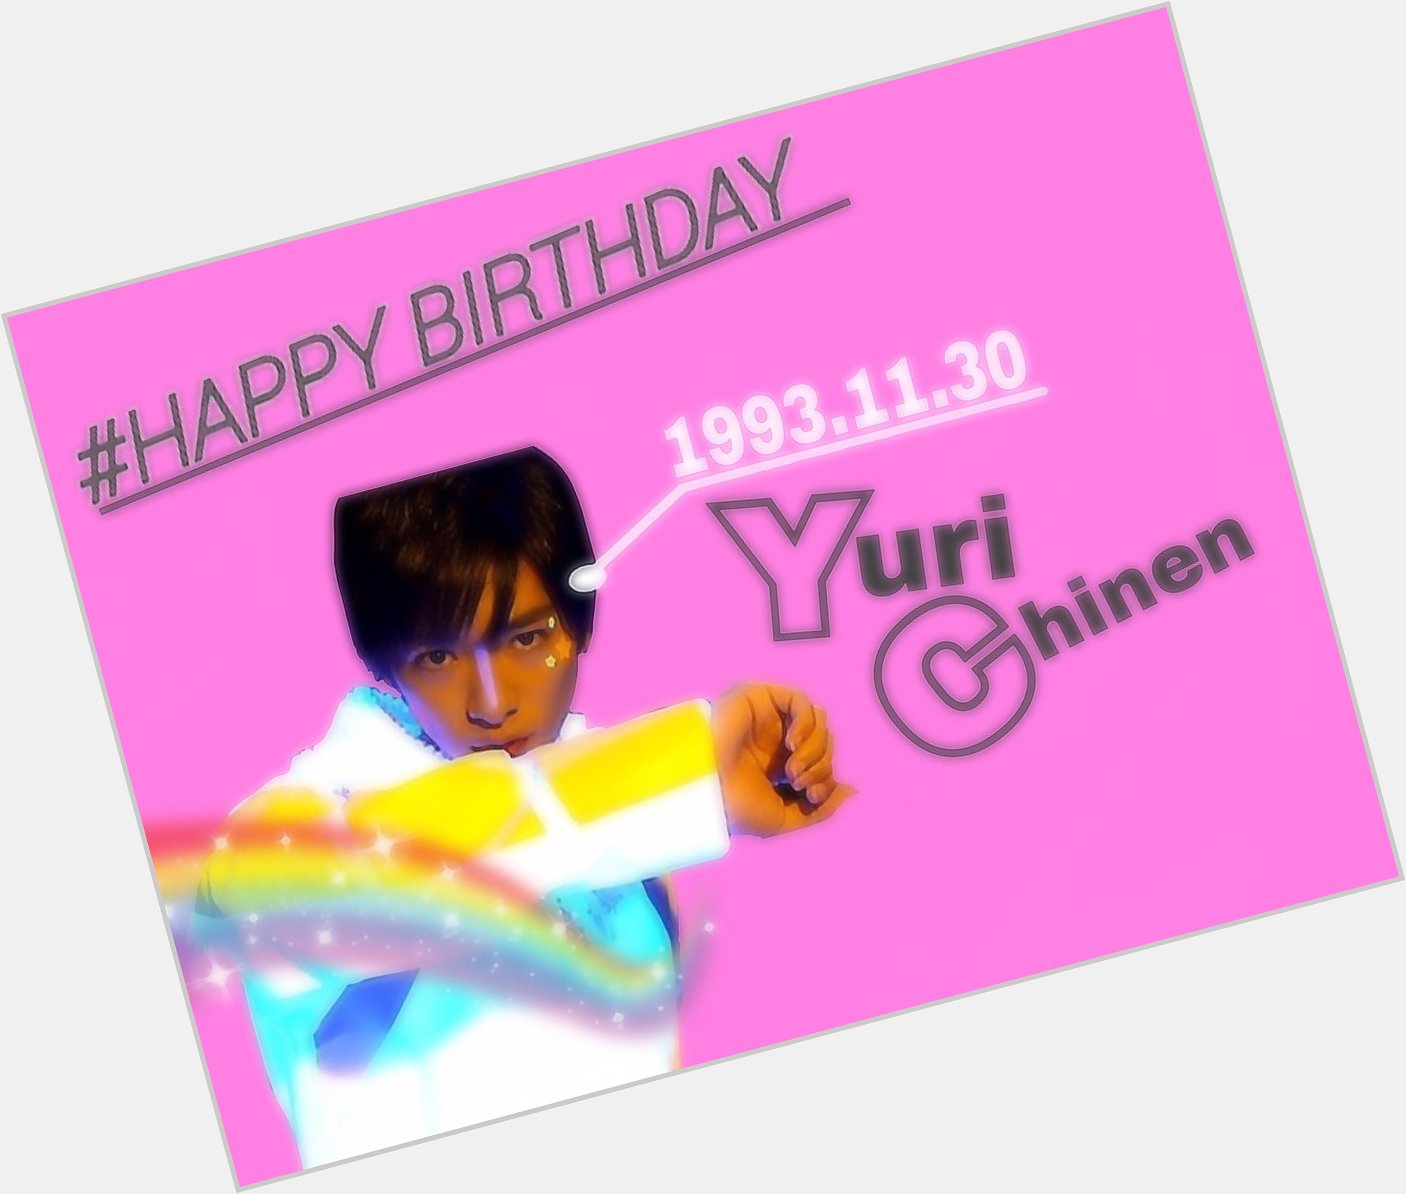  Yuri Chinen (24) HAPPY BIRTHDAY               